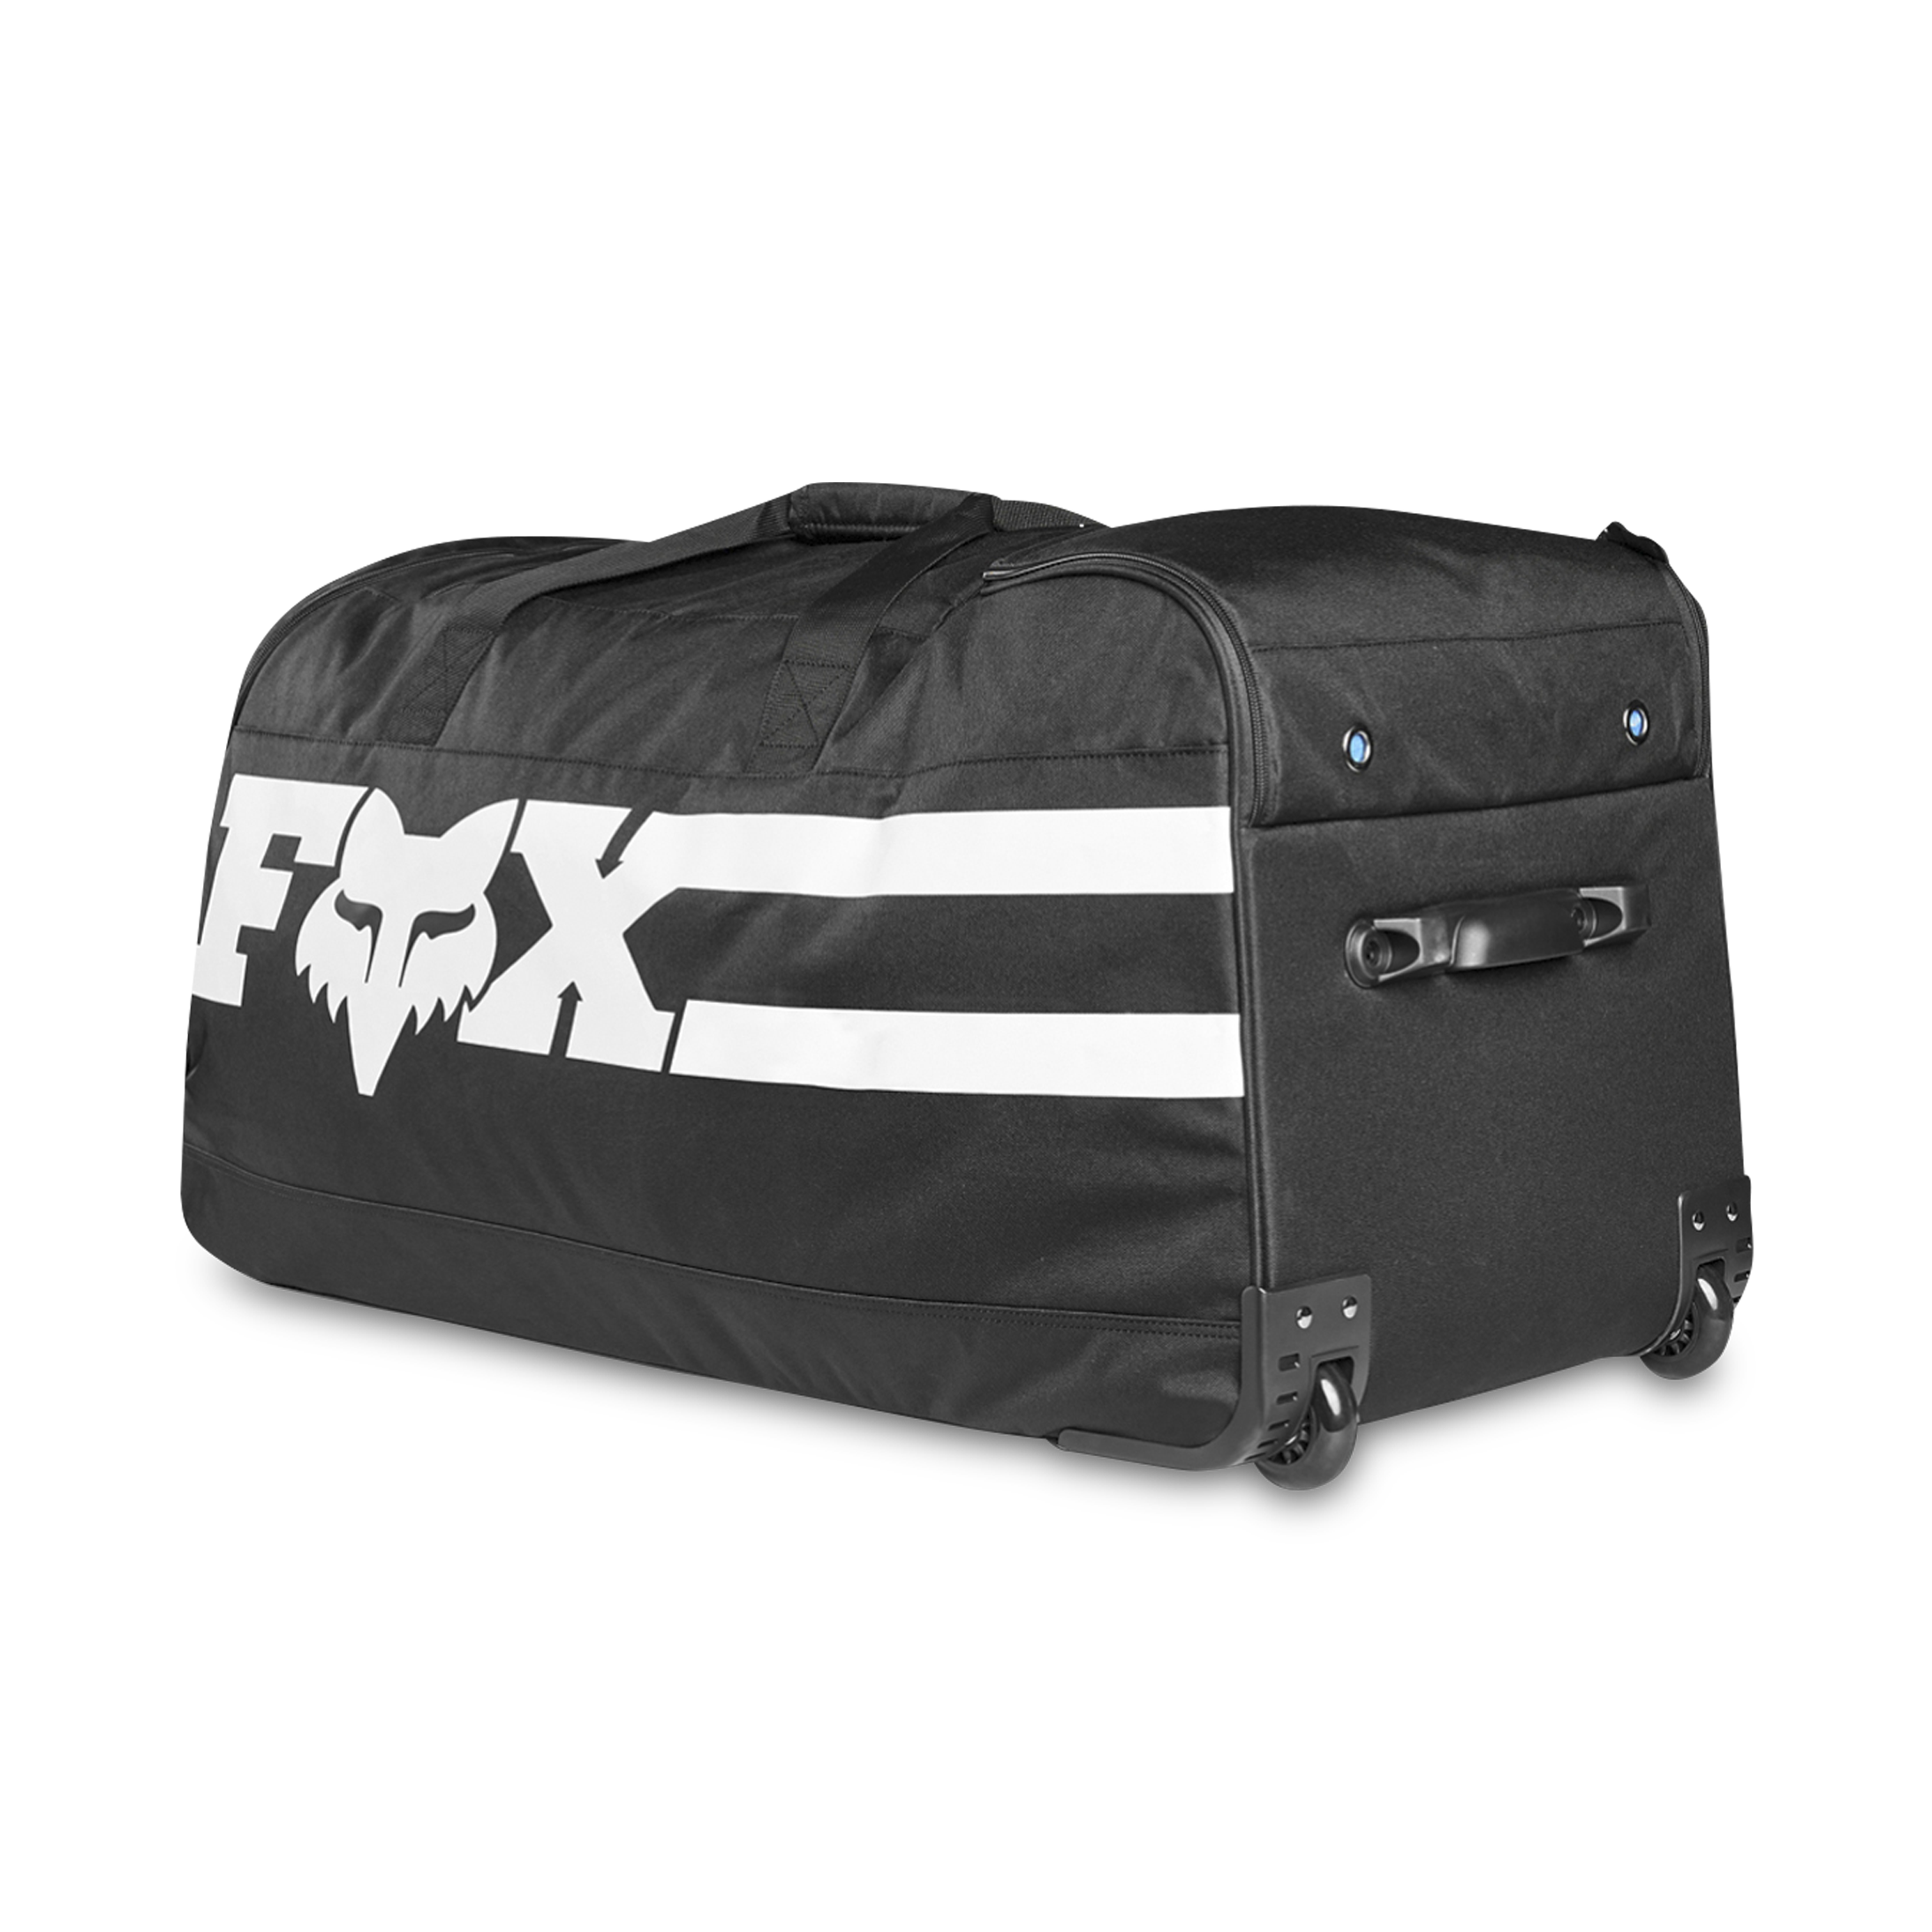 Bagged fox. Fox Shuttle Gear Bag. Fox Racing сумка. Fox Shuttle Roller. Fox large Seat Bag Black.